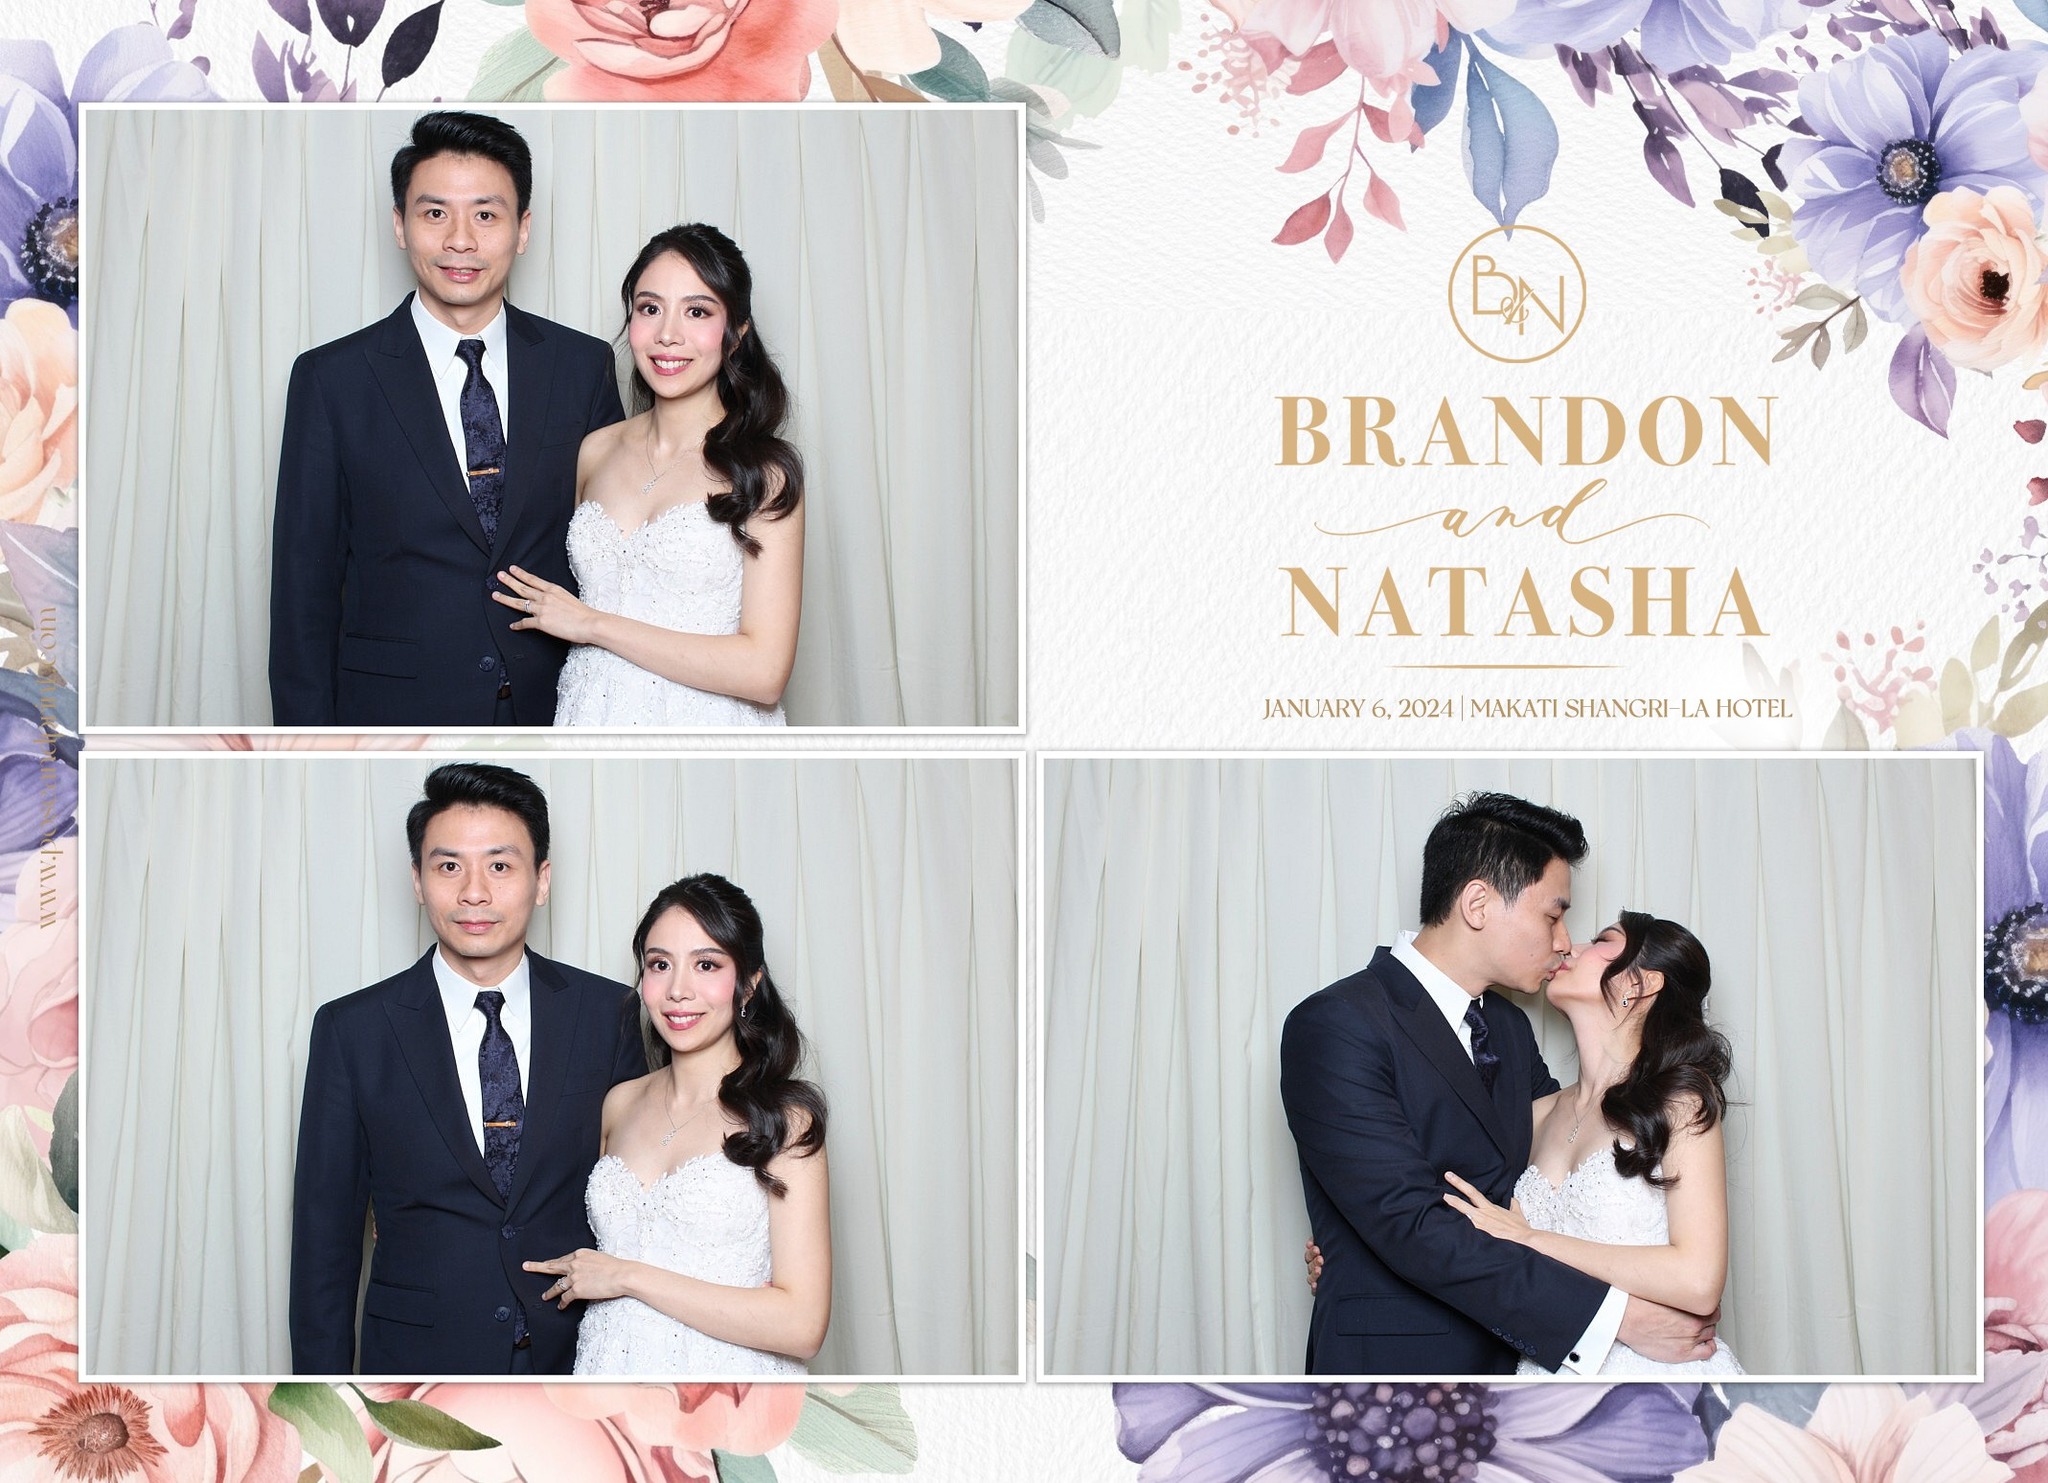 Brandon and Natasha’s Wedding